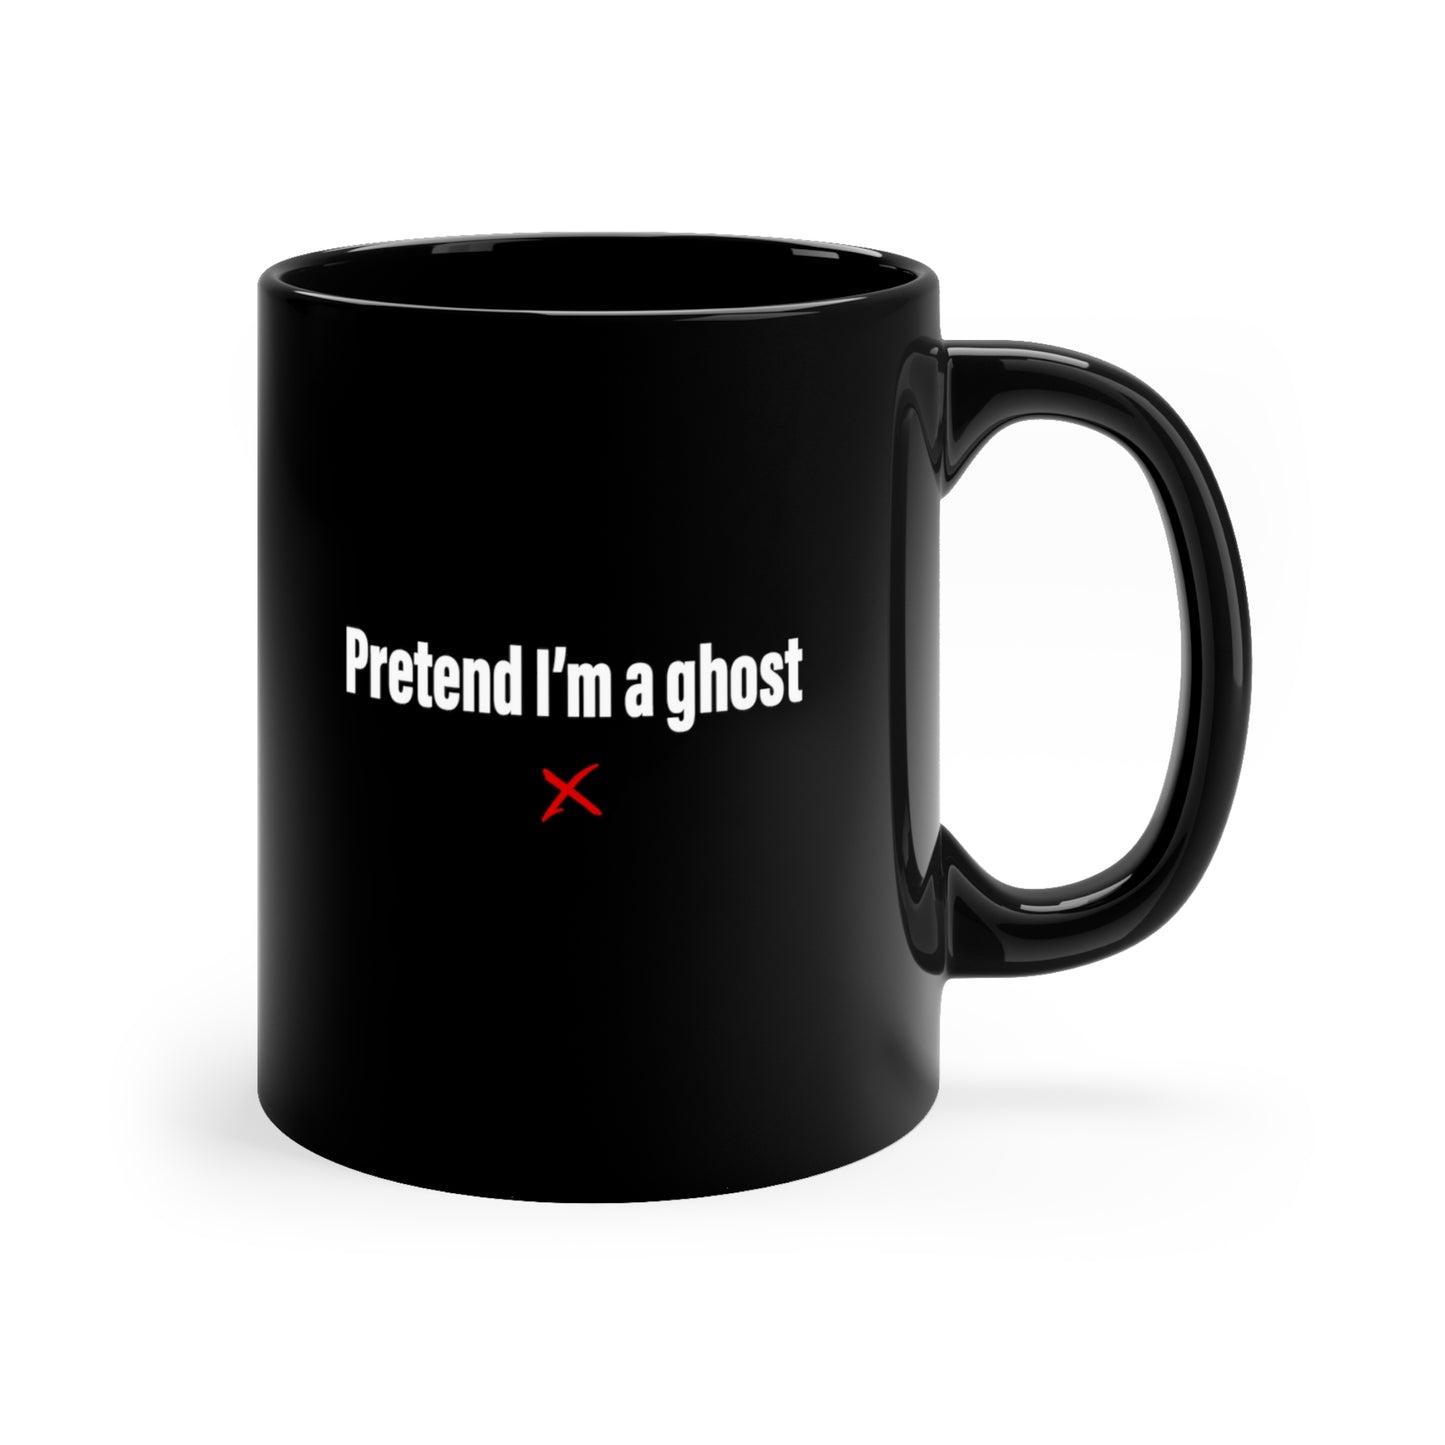 Pretend I'm a ghost - Mug